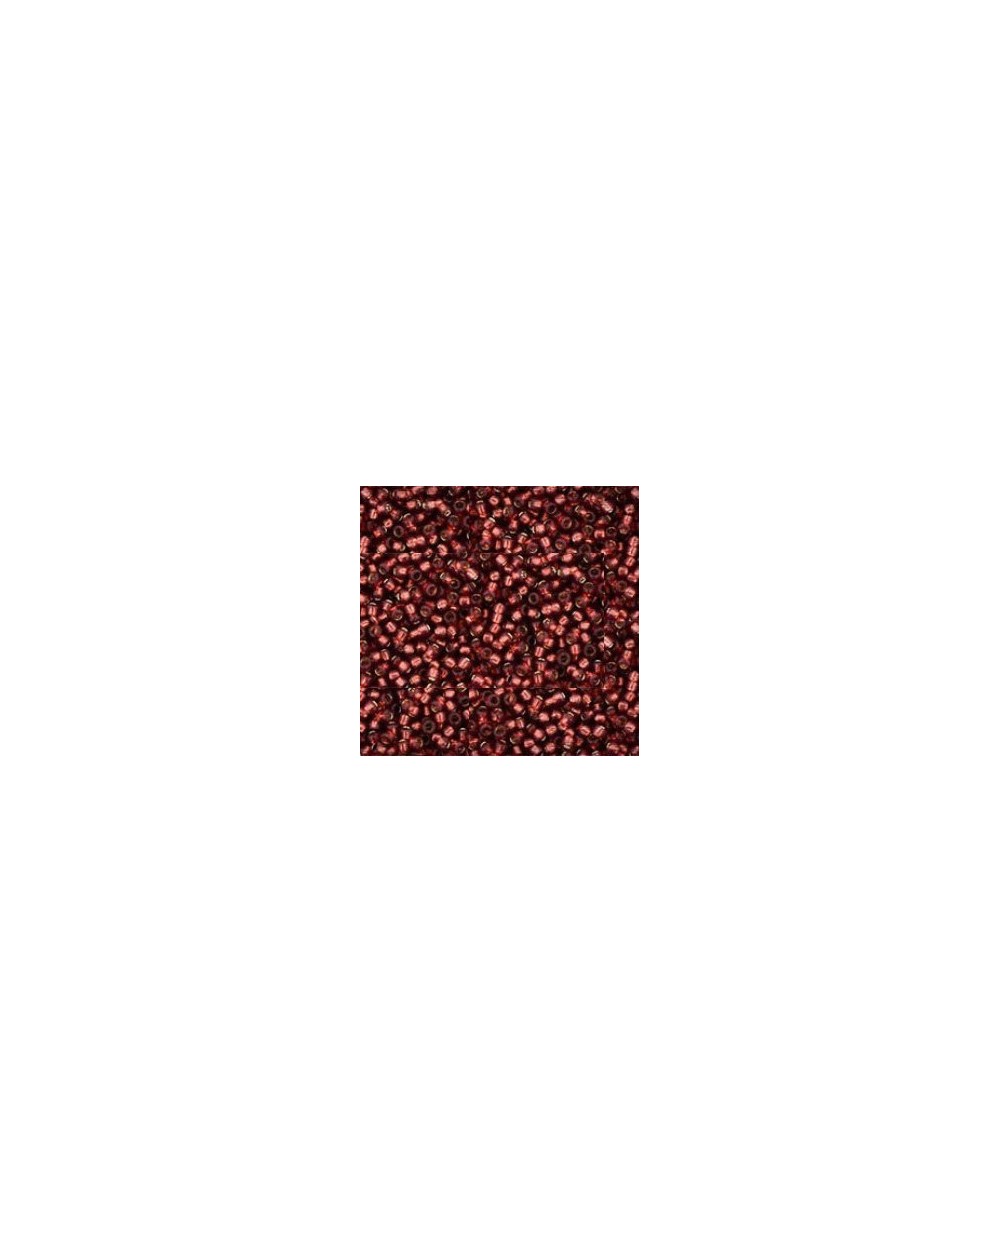 Biseris TOHO,Silver-Lined Milky Pomegranate , TR-15-2113, 10 gr.